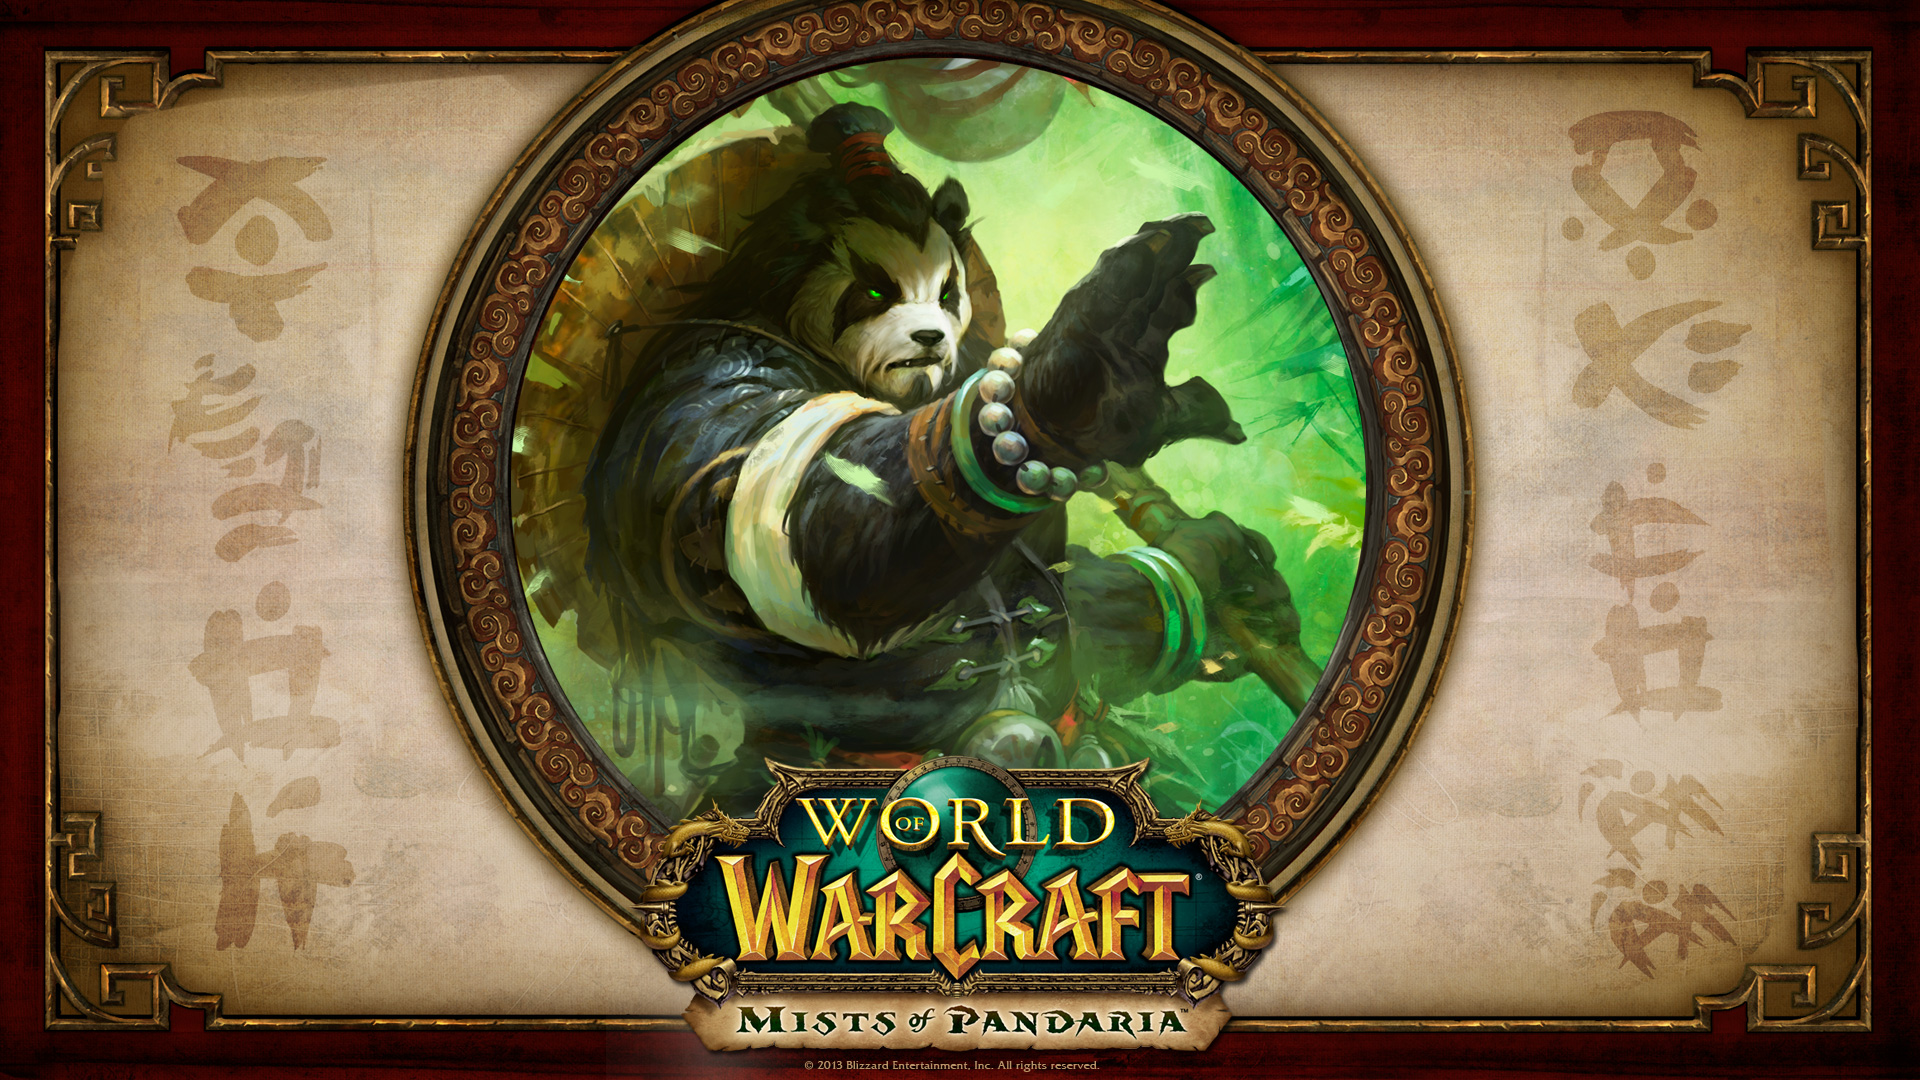 World of Warcraft: Mists of Pandaria: free desktop wallpaper and background image